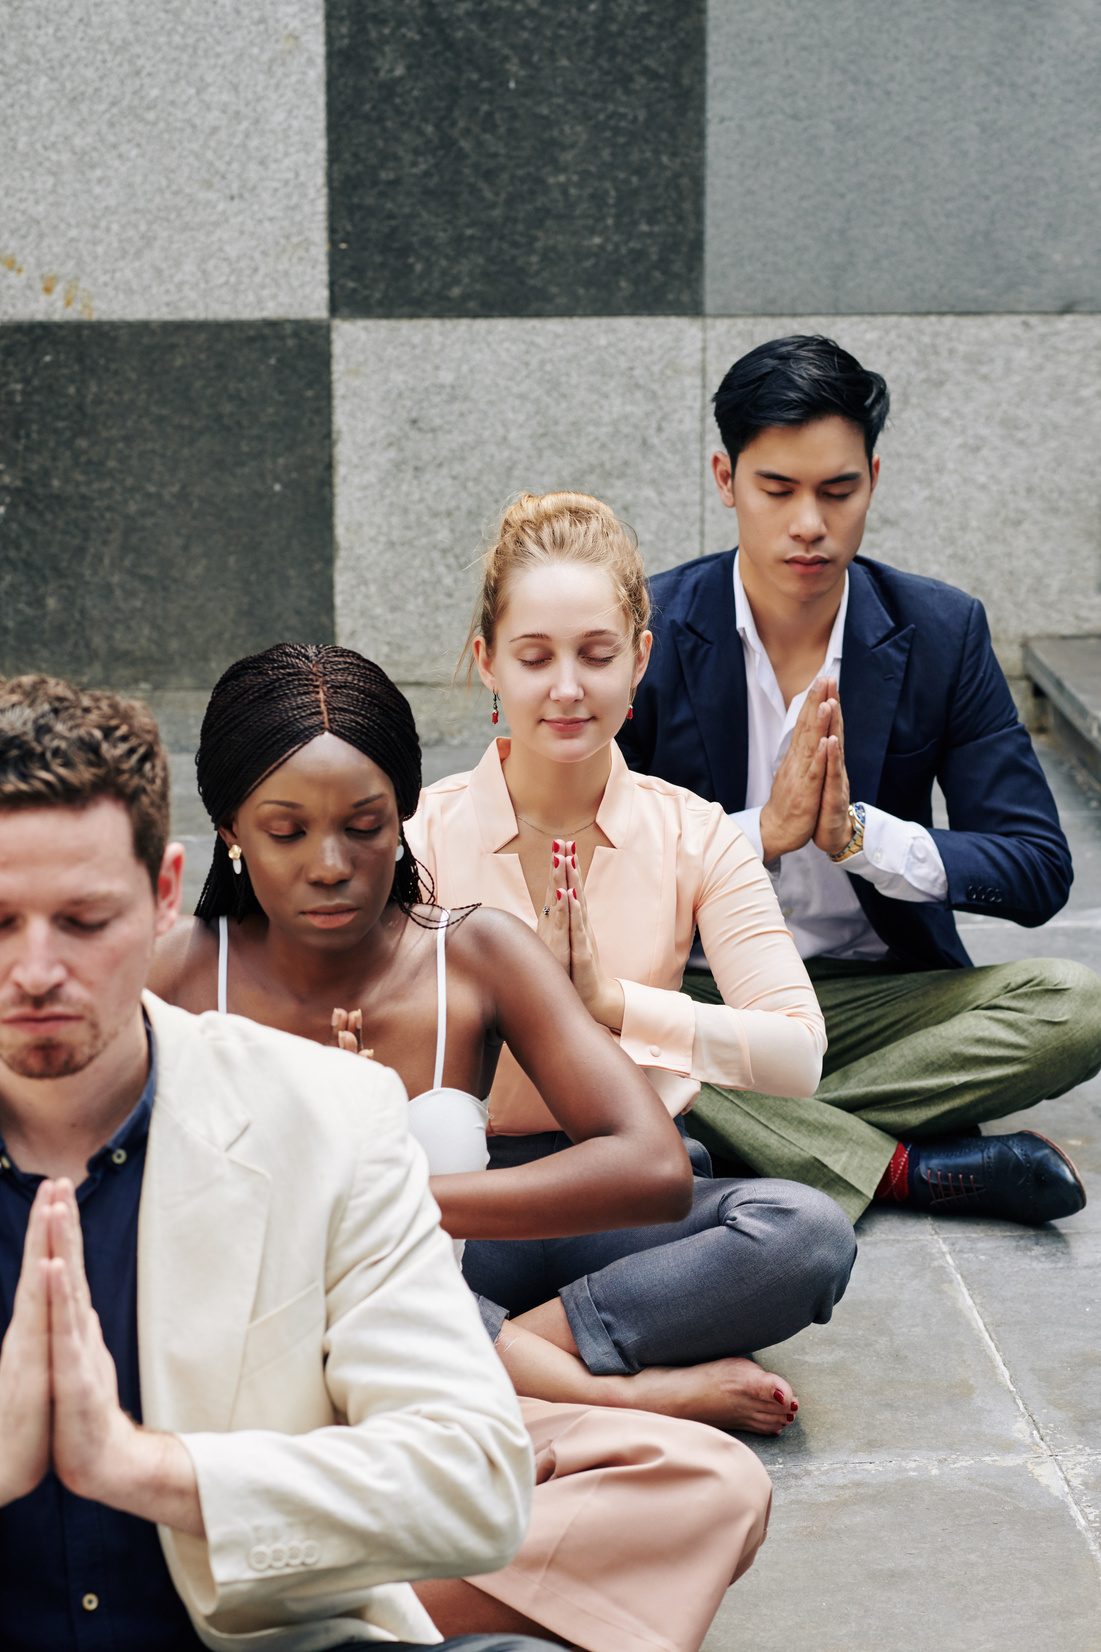 Business People Meditating